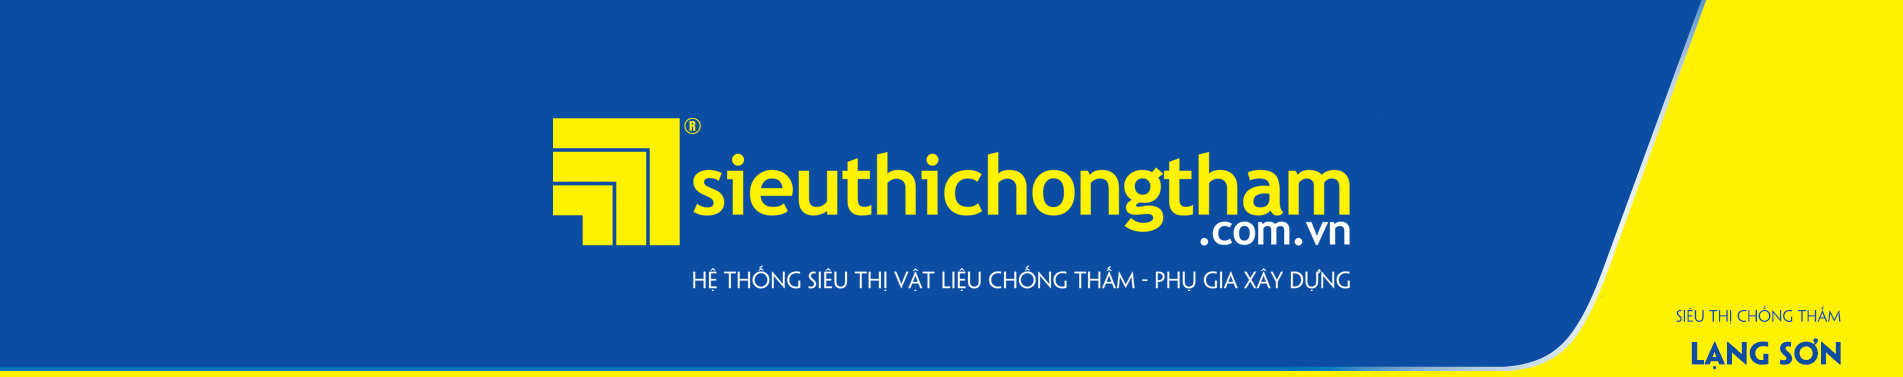 Sieu Thi Chong Tham Lang Son